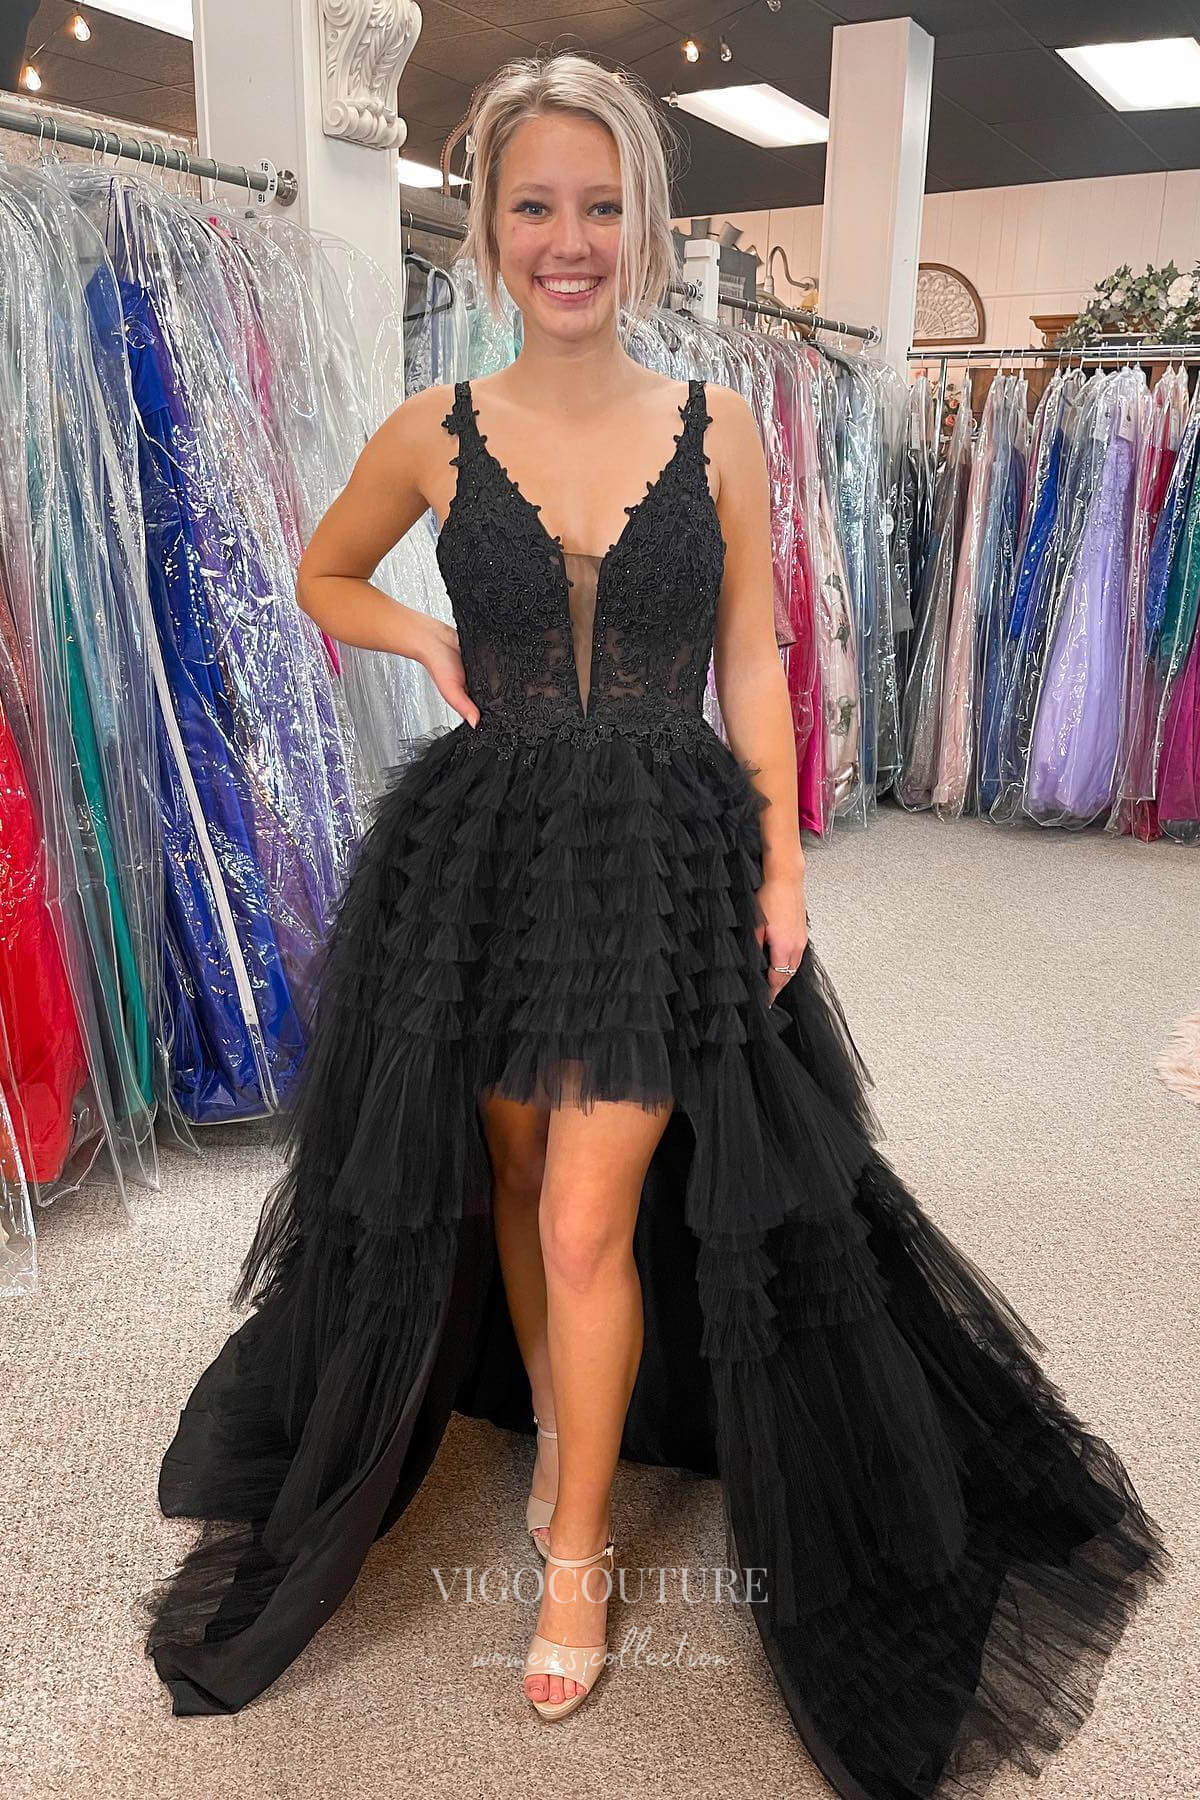 Black High-Low Spaghetti Strap Prom Dress with Lace Applique Bodice and Ruffled Bottom 22203-Prom Dresses-vigocouture-Black-US2-vigocouture